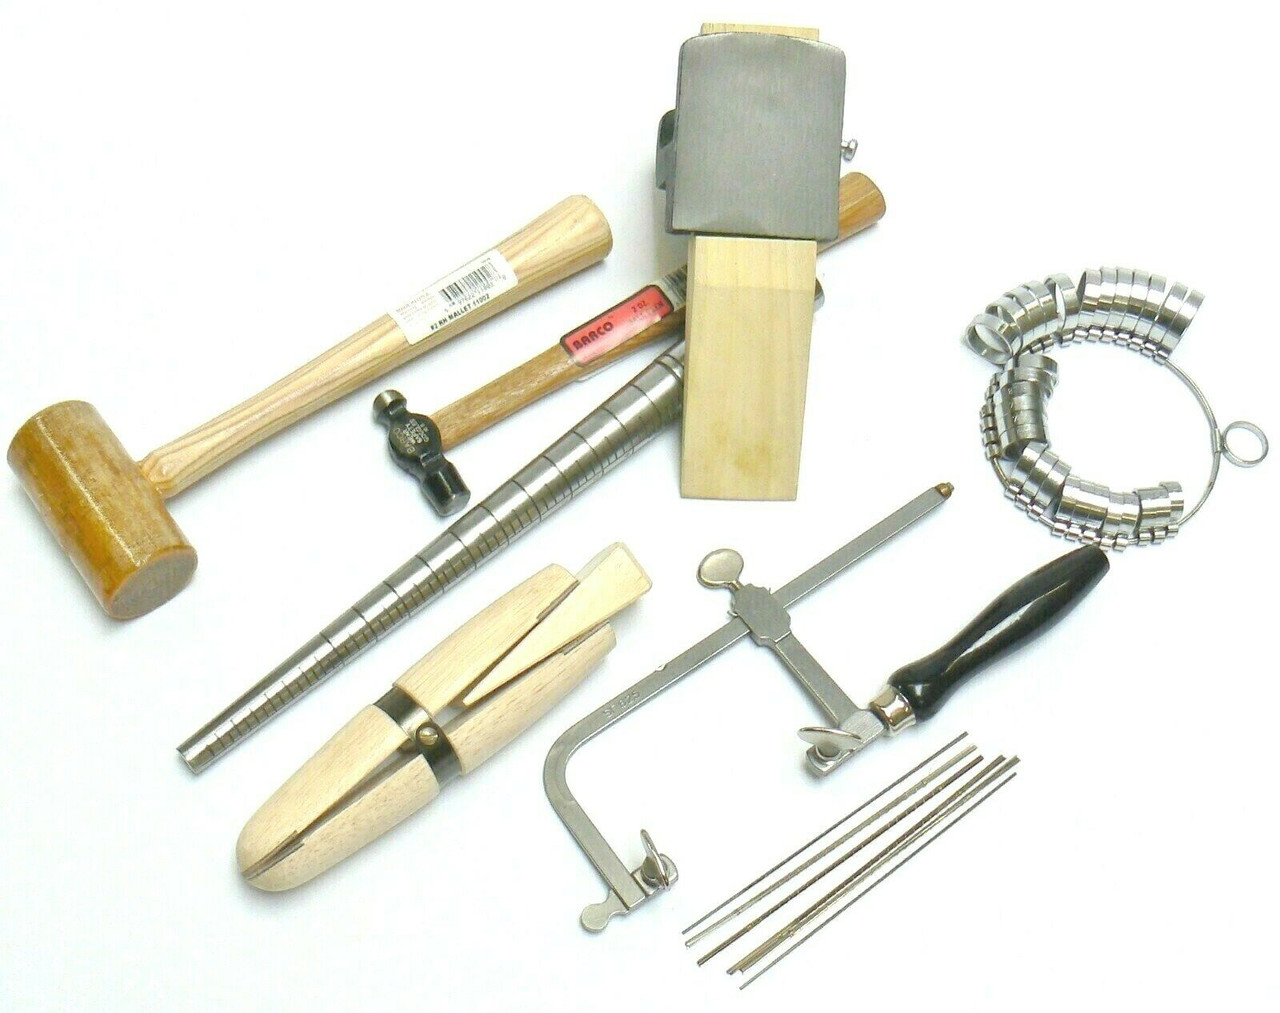 Jewelry Making Kit Basic Tool Jewelers Set